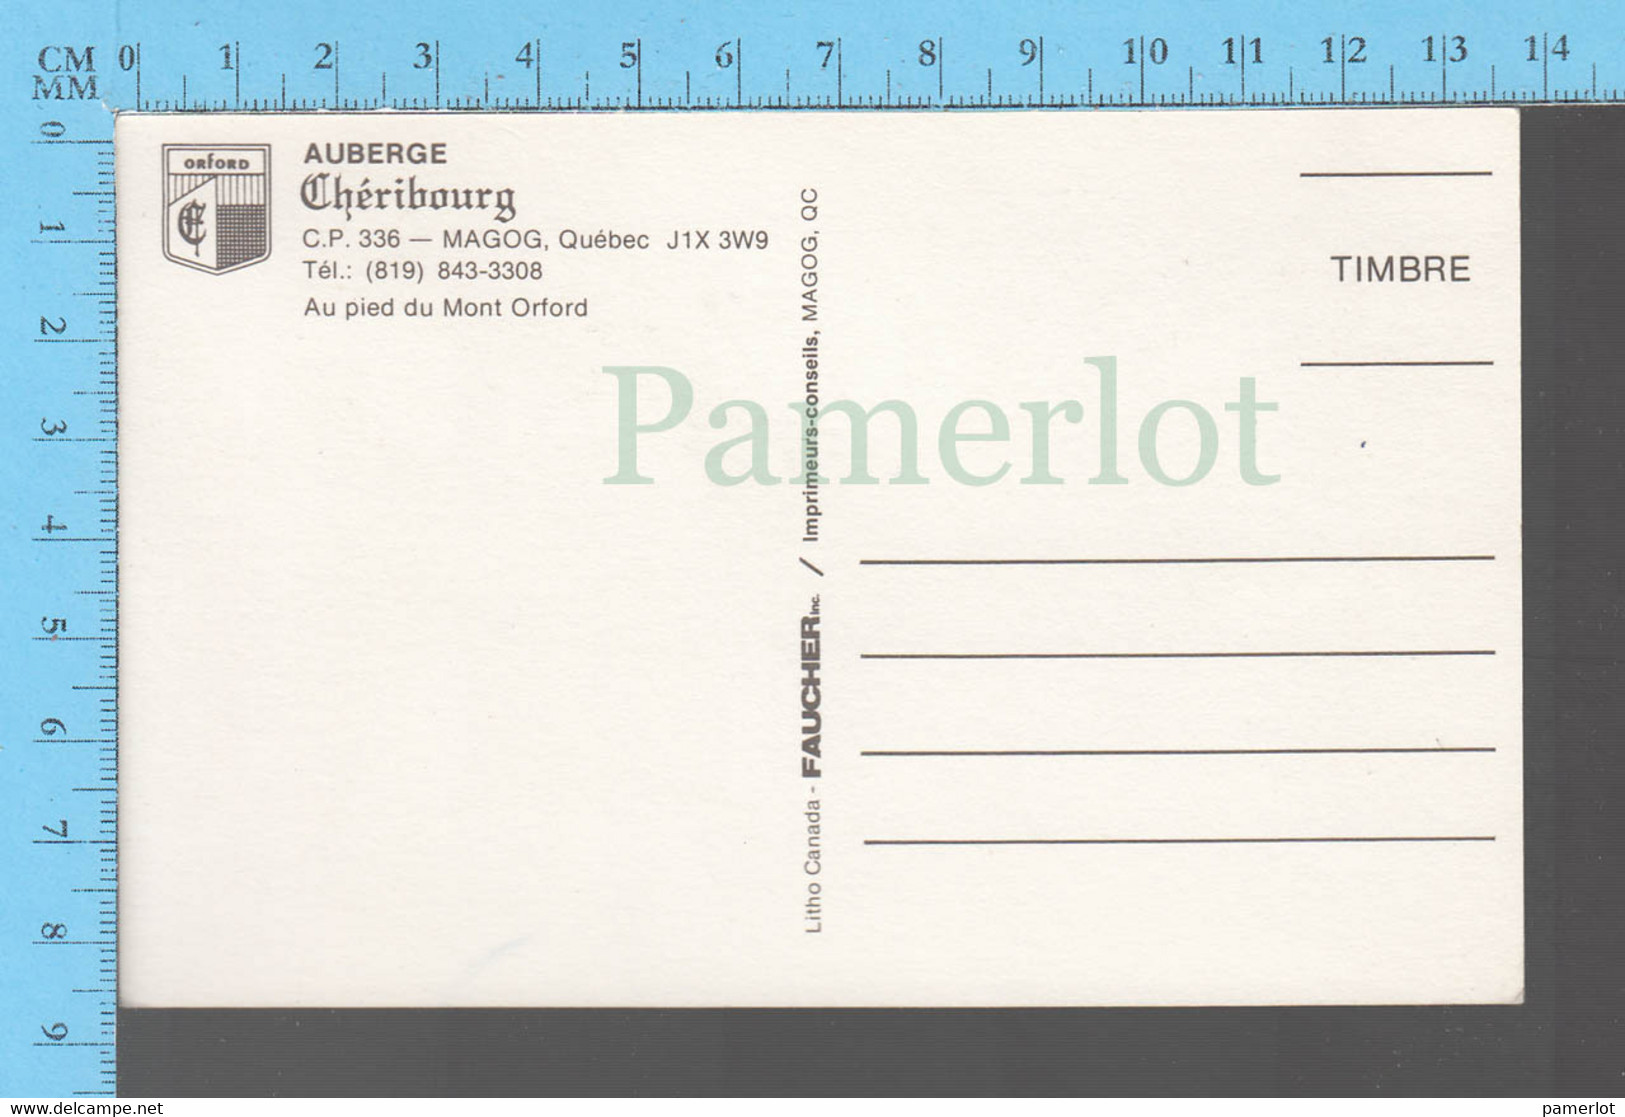 Magog P.Q Canada - Auberge Cheribour, Carte Postale Post Card, Cpm - Moderne Ansichtskarten